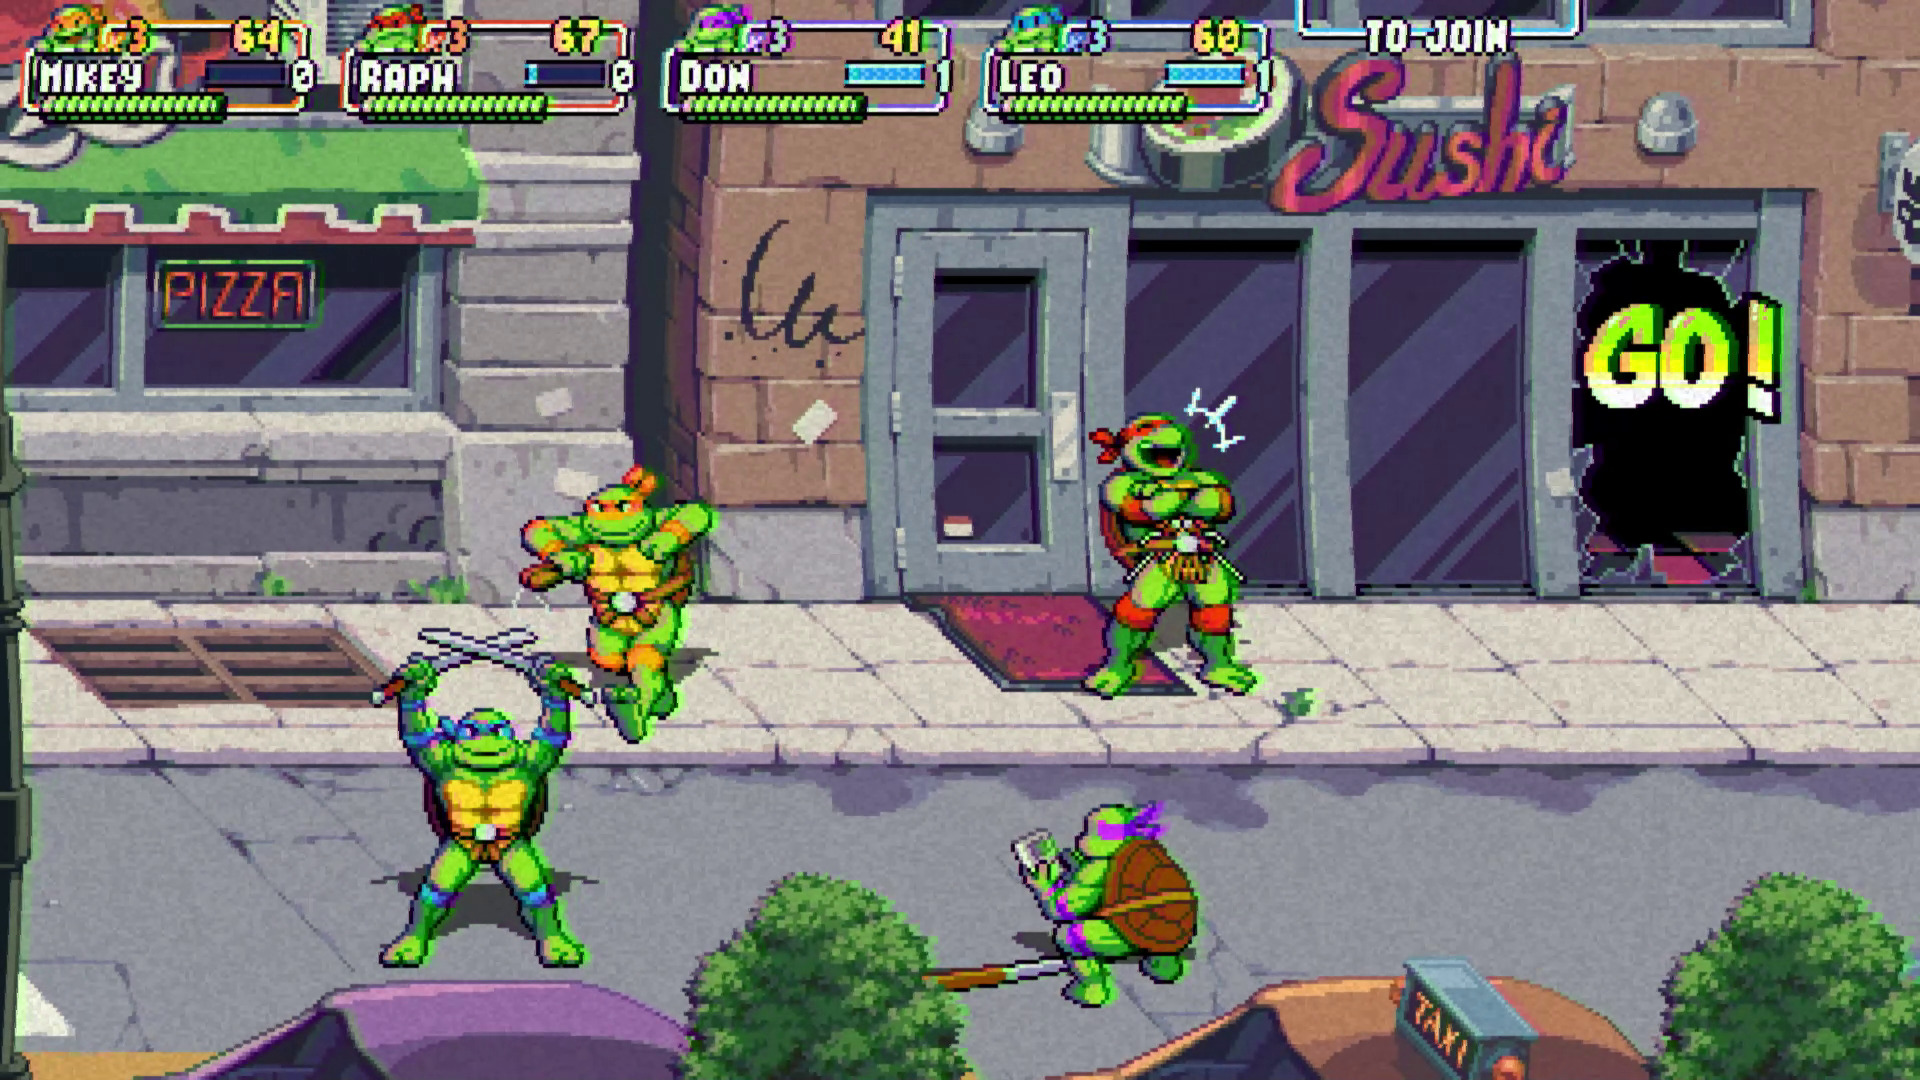 It's pizza time -- Teenage Mutant Ninja Turtles: Shredder's Revenge  launches June 16th — GAMINGTREND